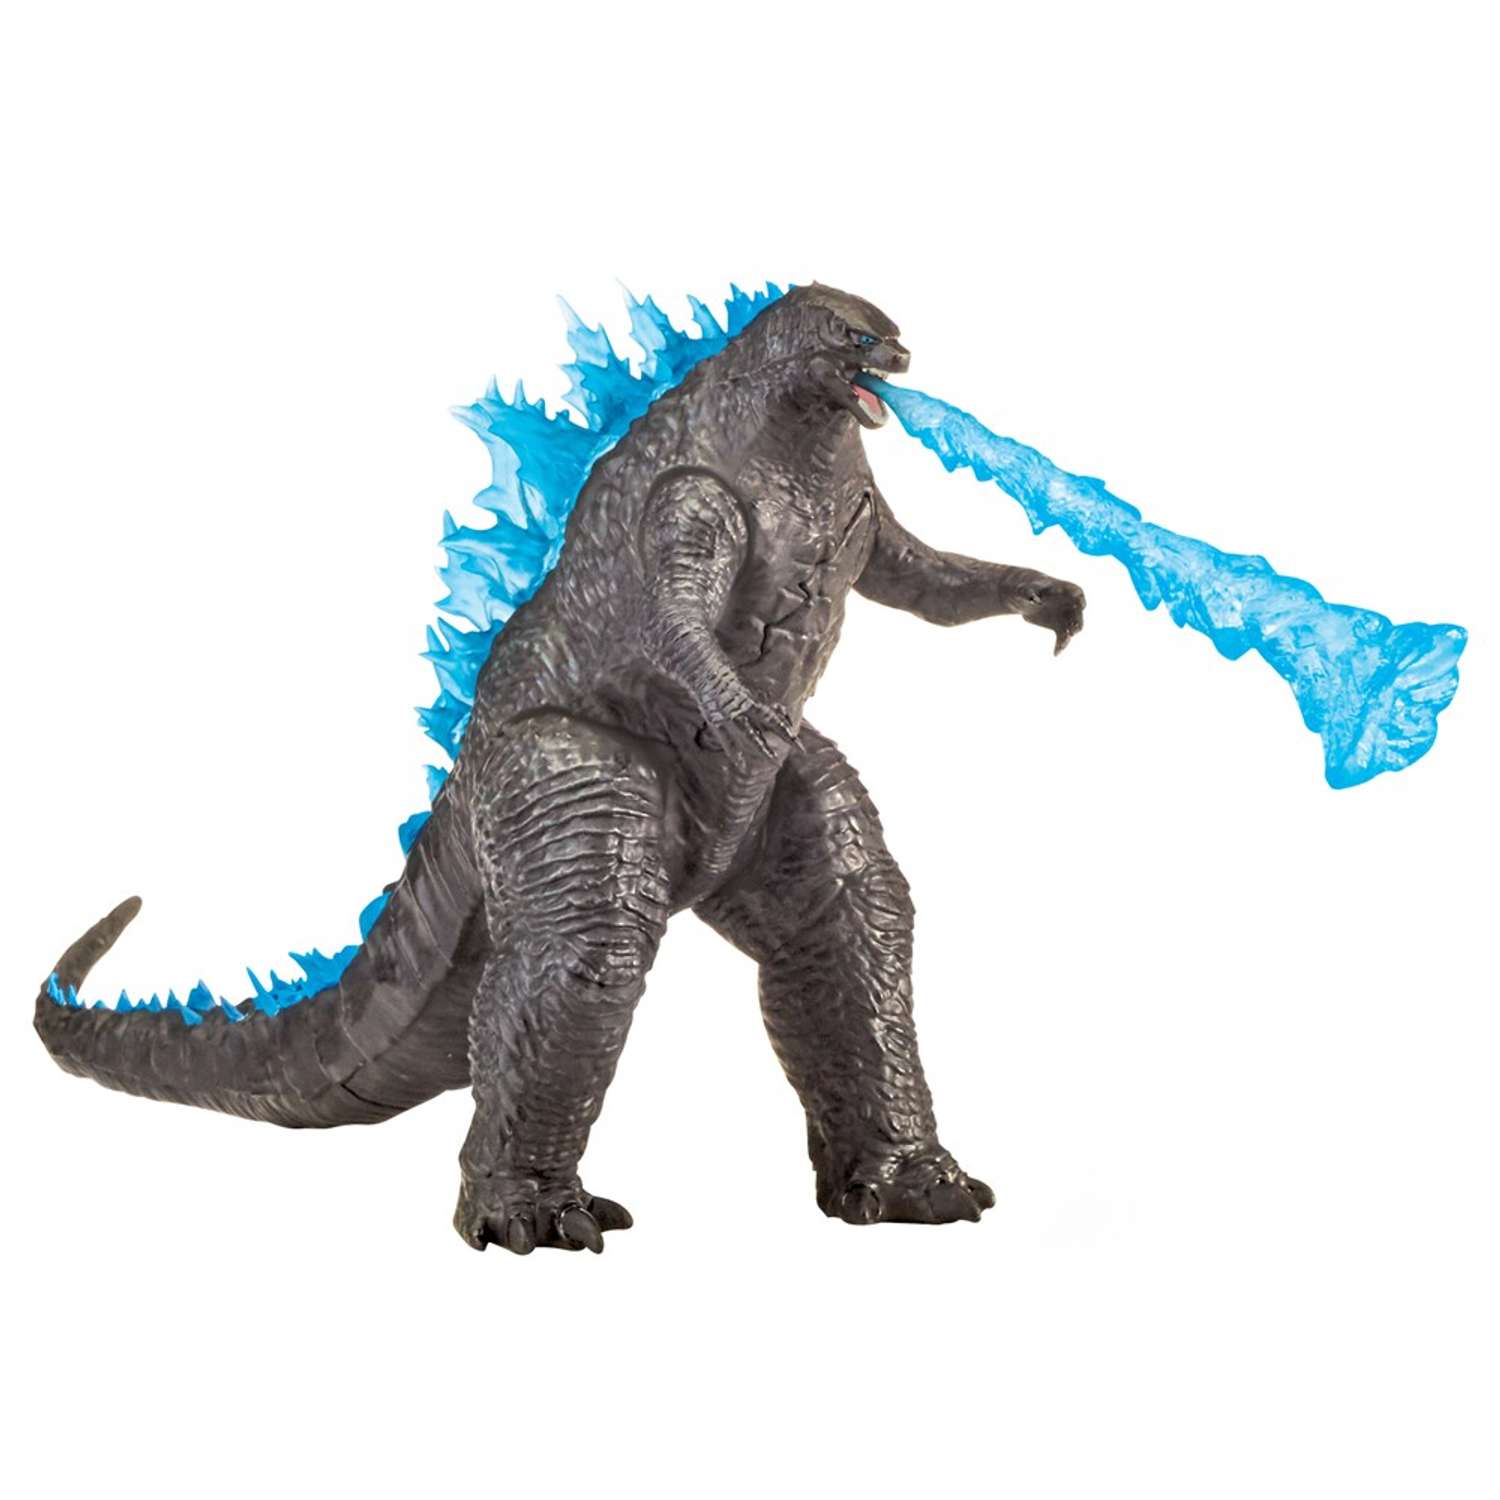 Рев годзиллы. Godzilla vs King 2021 игрушки. Фигурка Годзилла против Конга (Godzilla vs. Kong Basic Godzilla Heat ray Figure). Игрушки Кинг Конг и Годзилла. Игрушки Годзилла против Конга Конг.